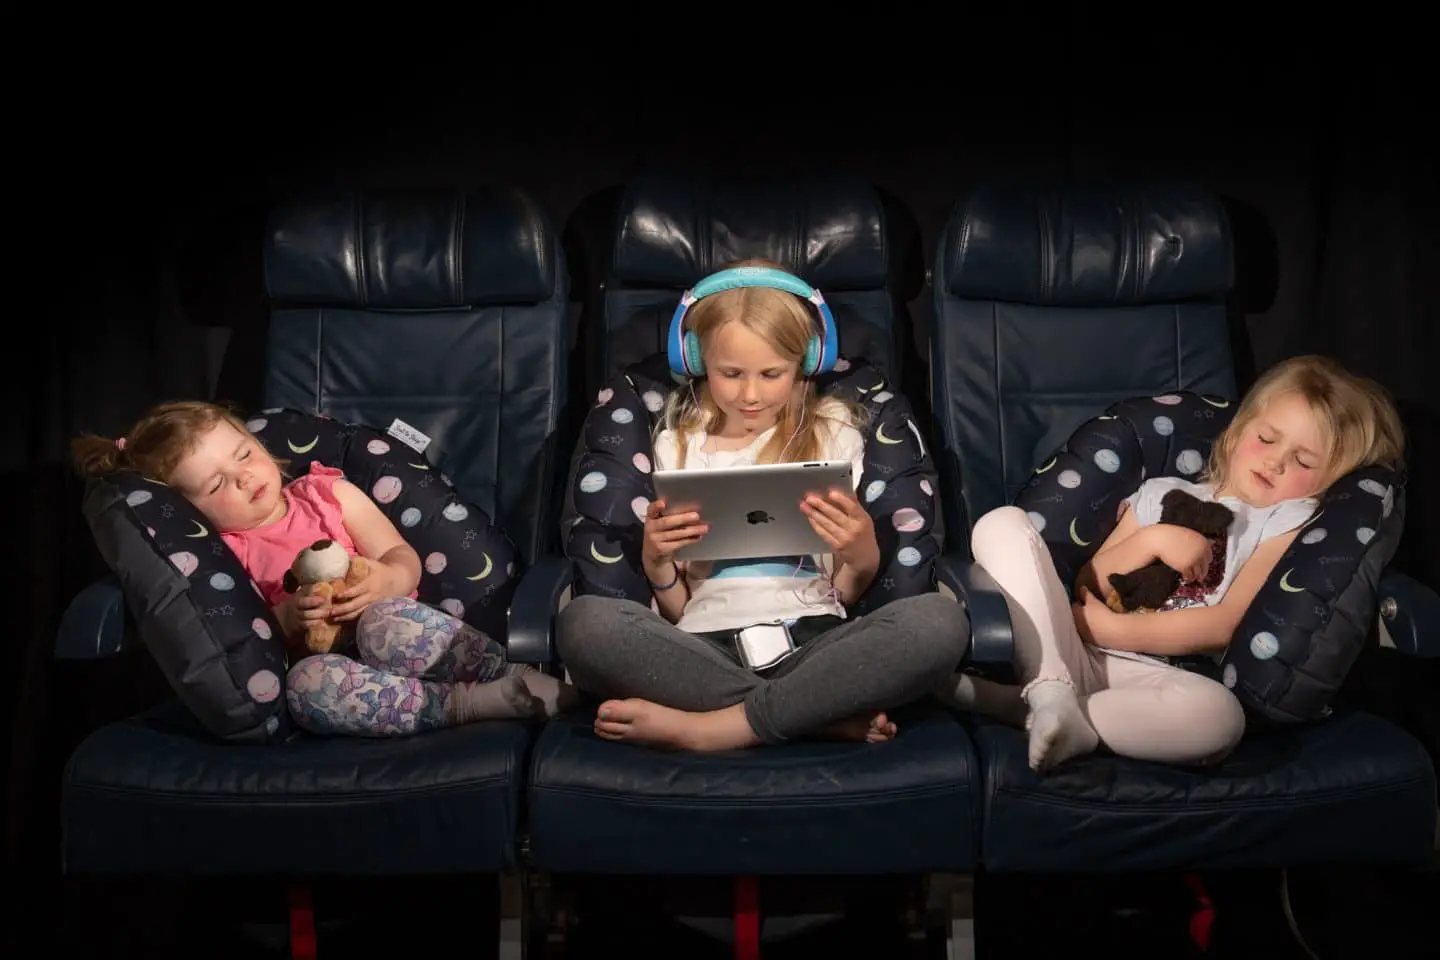 children using a cushion on airplane flight